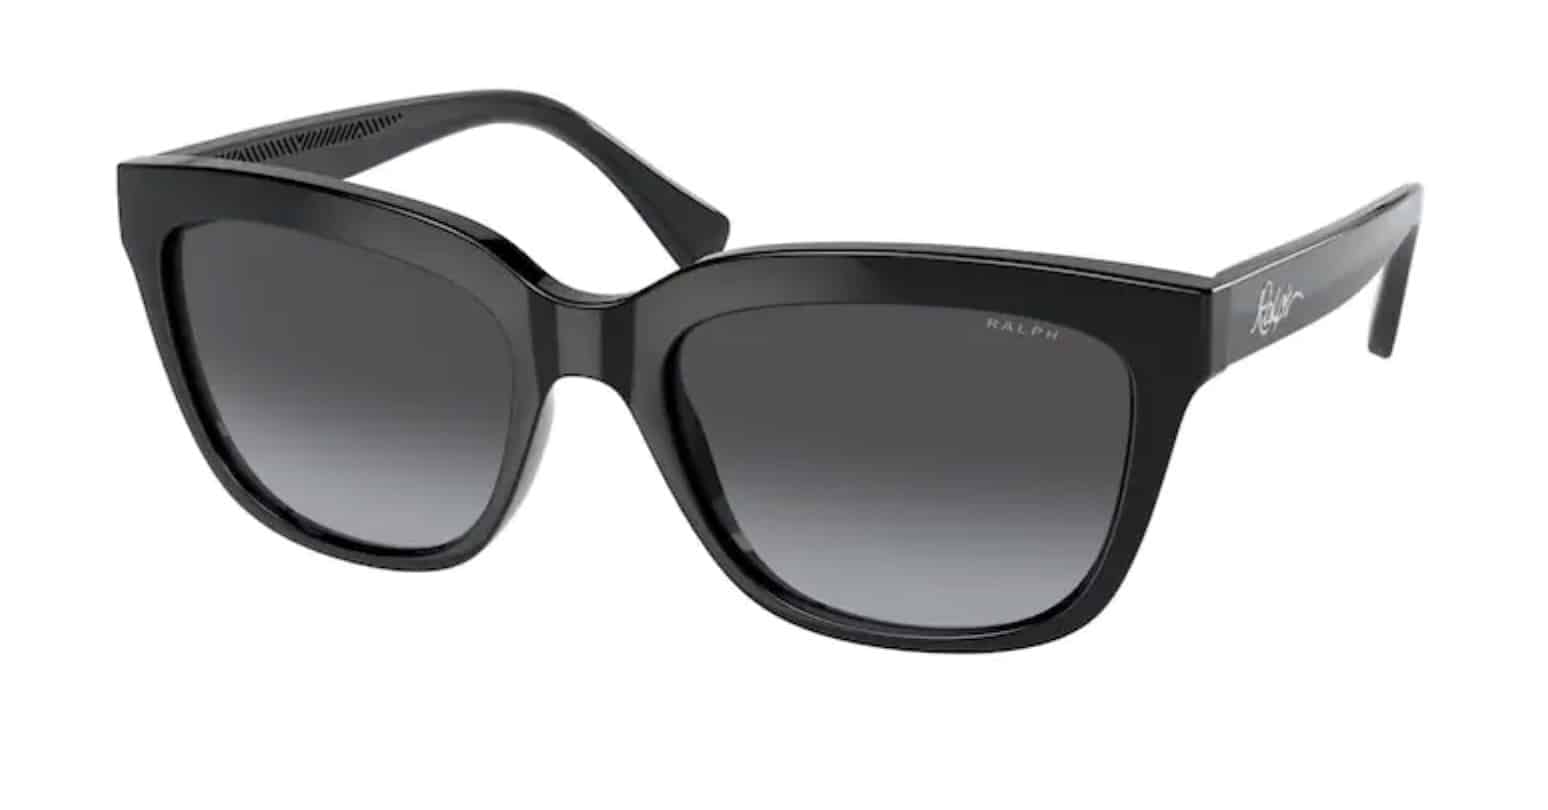 Ralph RA5261 Sunglasses - SafetyGearPro.com